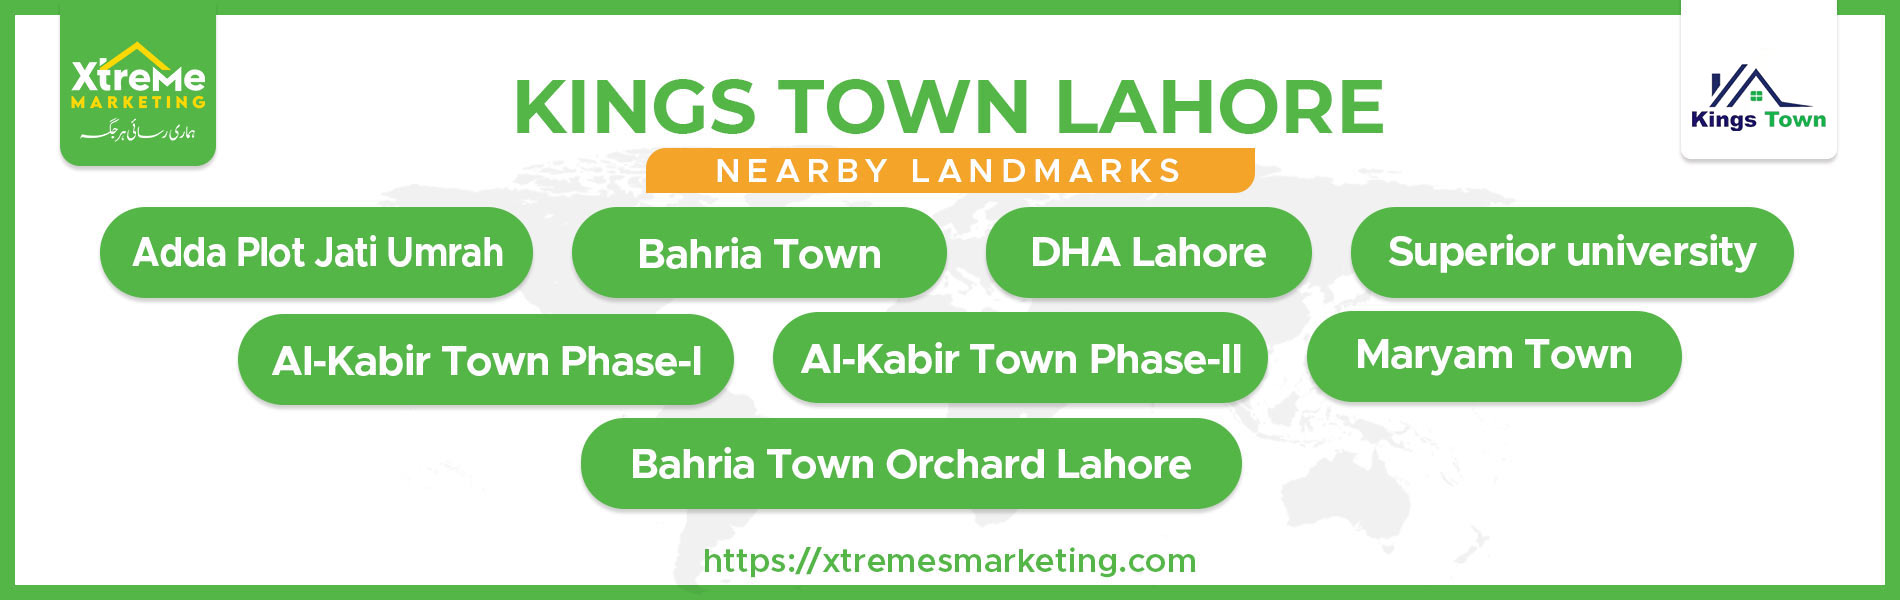 Kings Town Lahore NEARBY landmarks